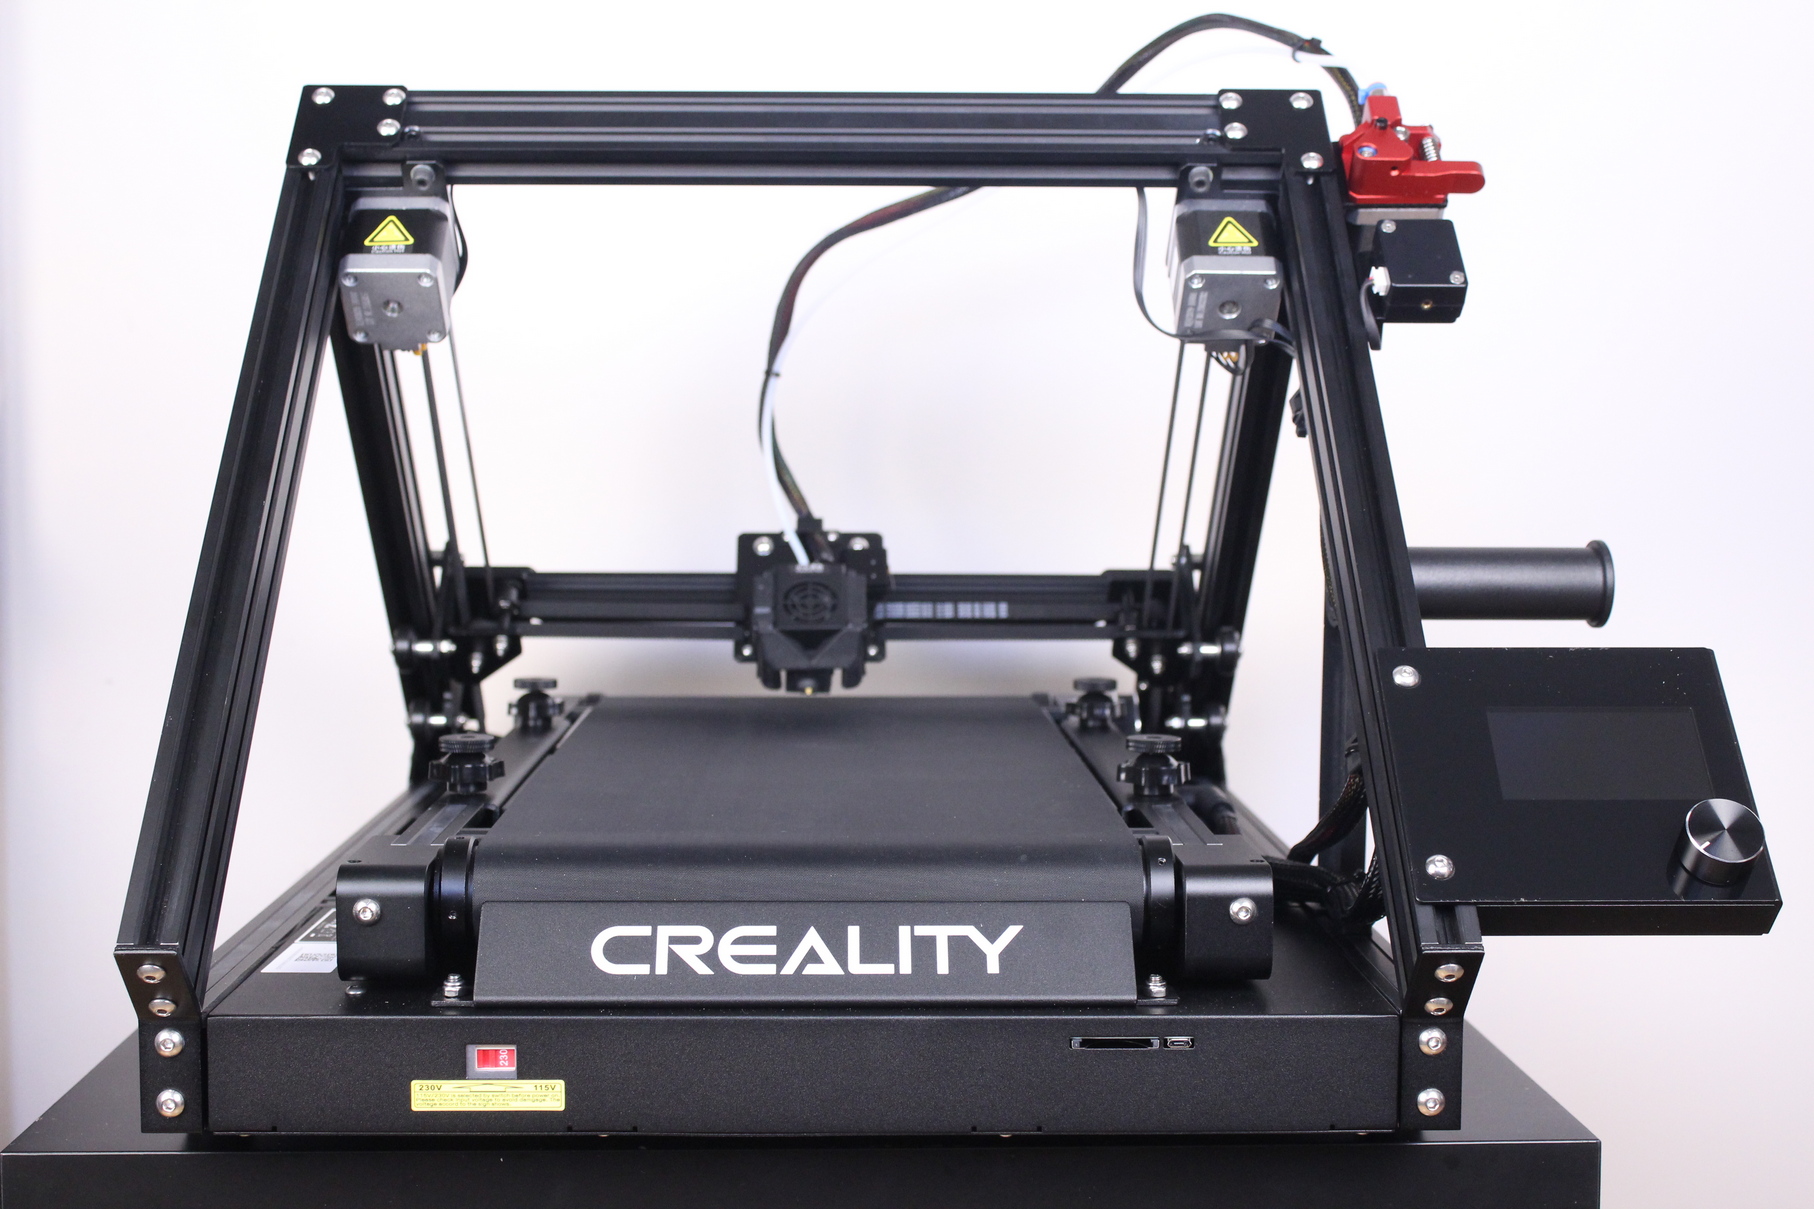 Creality CR 30 3DPrintMill Design 4 | Creality 3DPrintMill (CR-30) Review: Belt Printer for Batch 3D Printing